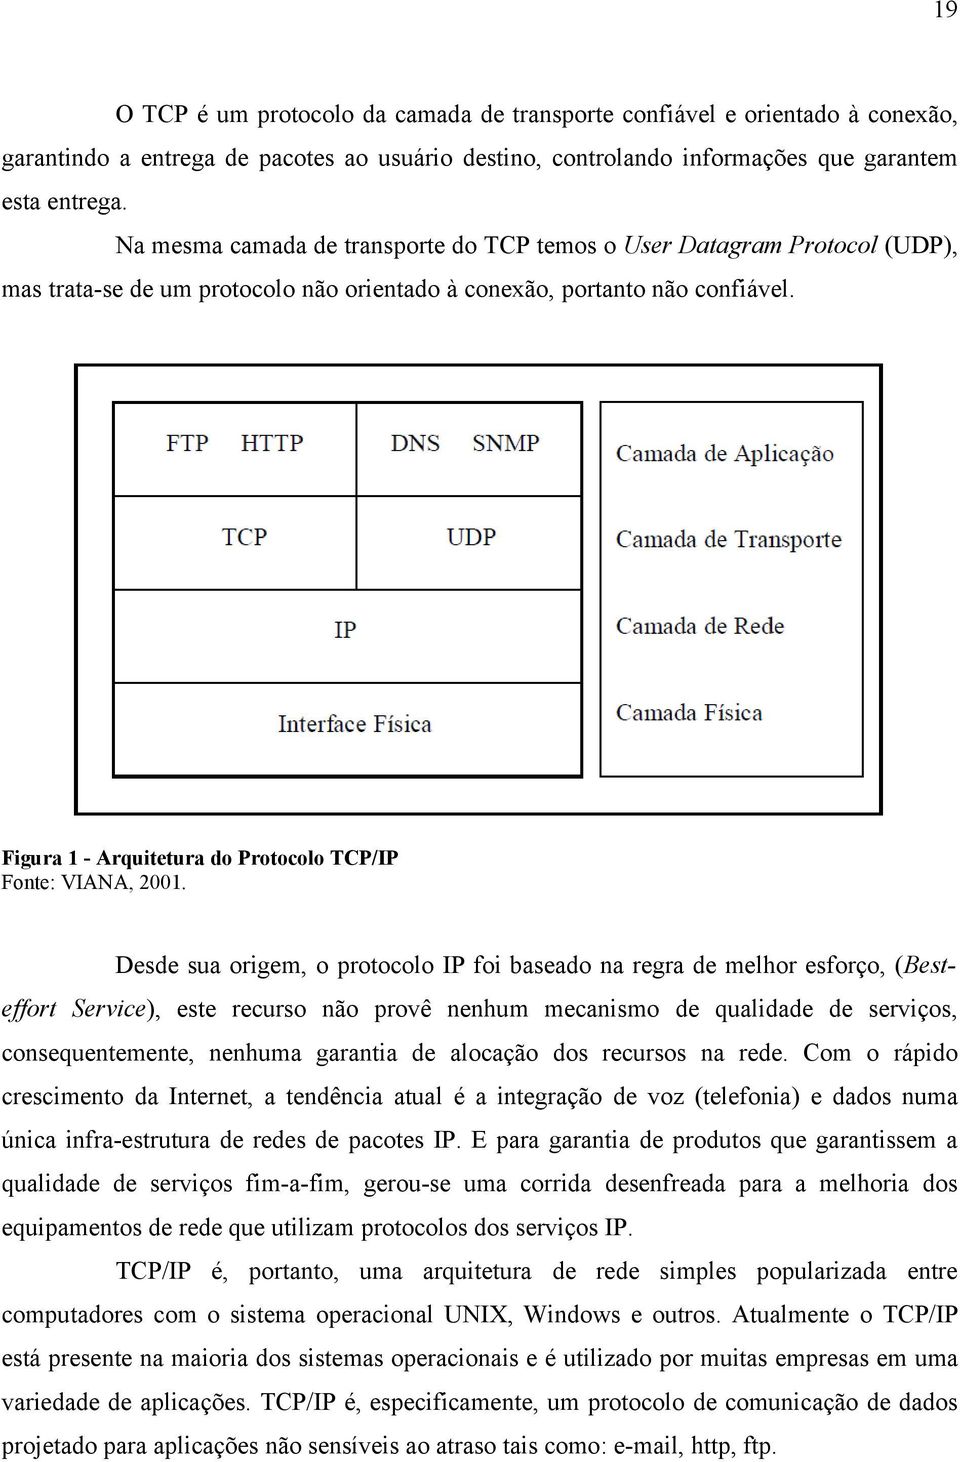 Figura 1 - Arquitetura do Protocolo TCP/IP Fonte: VIANA, 2001.